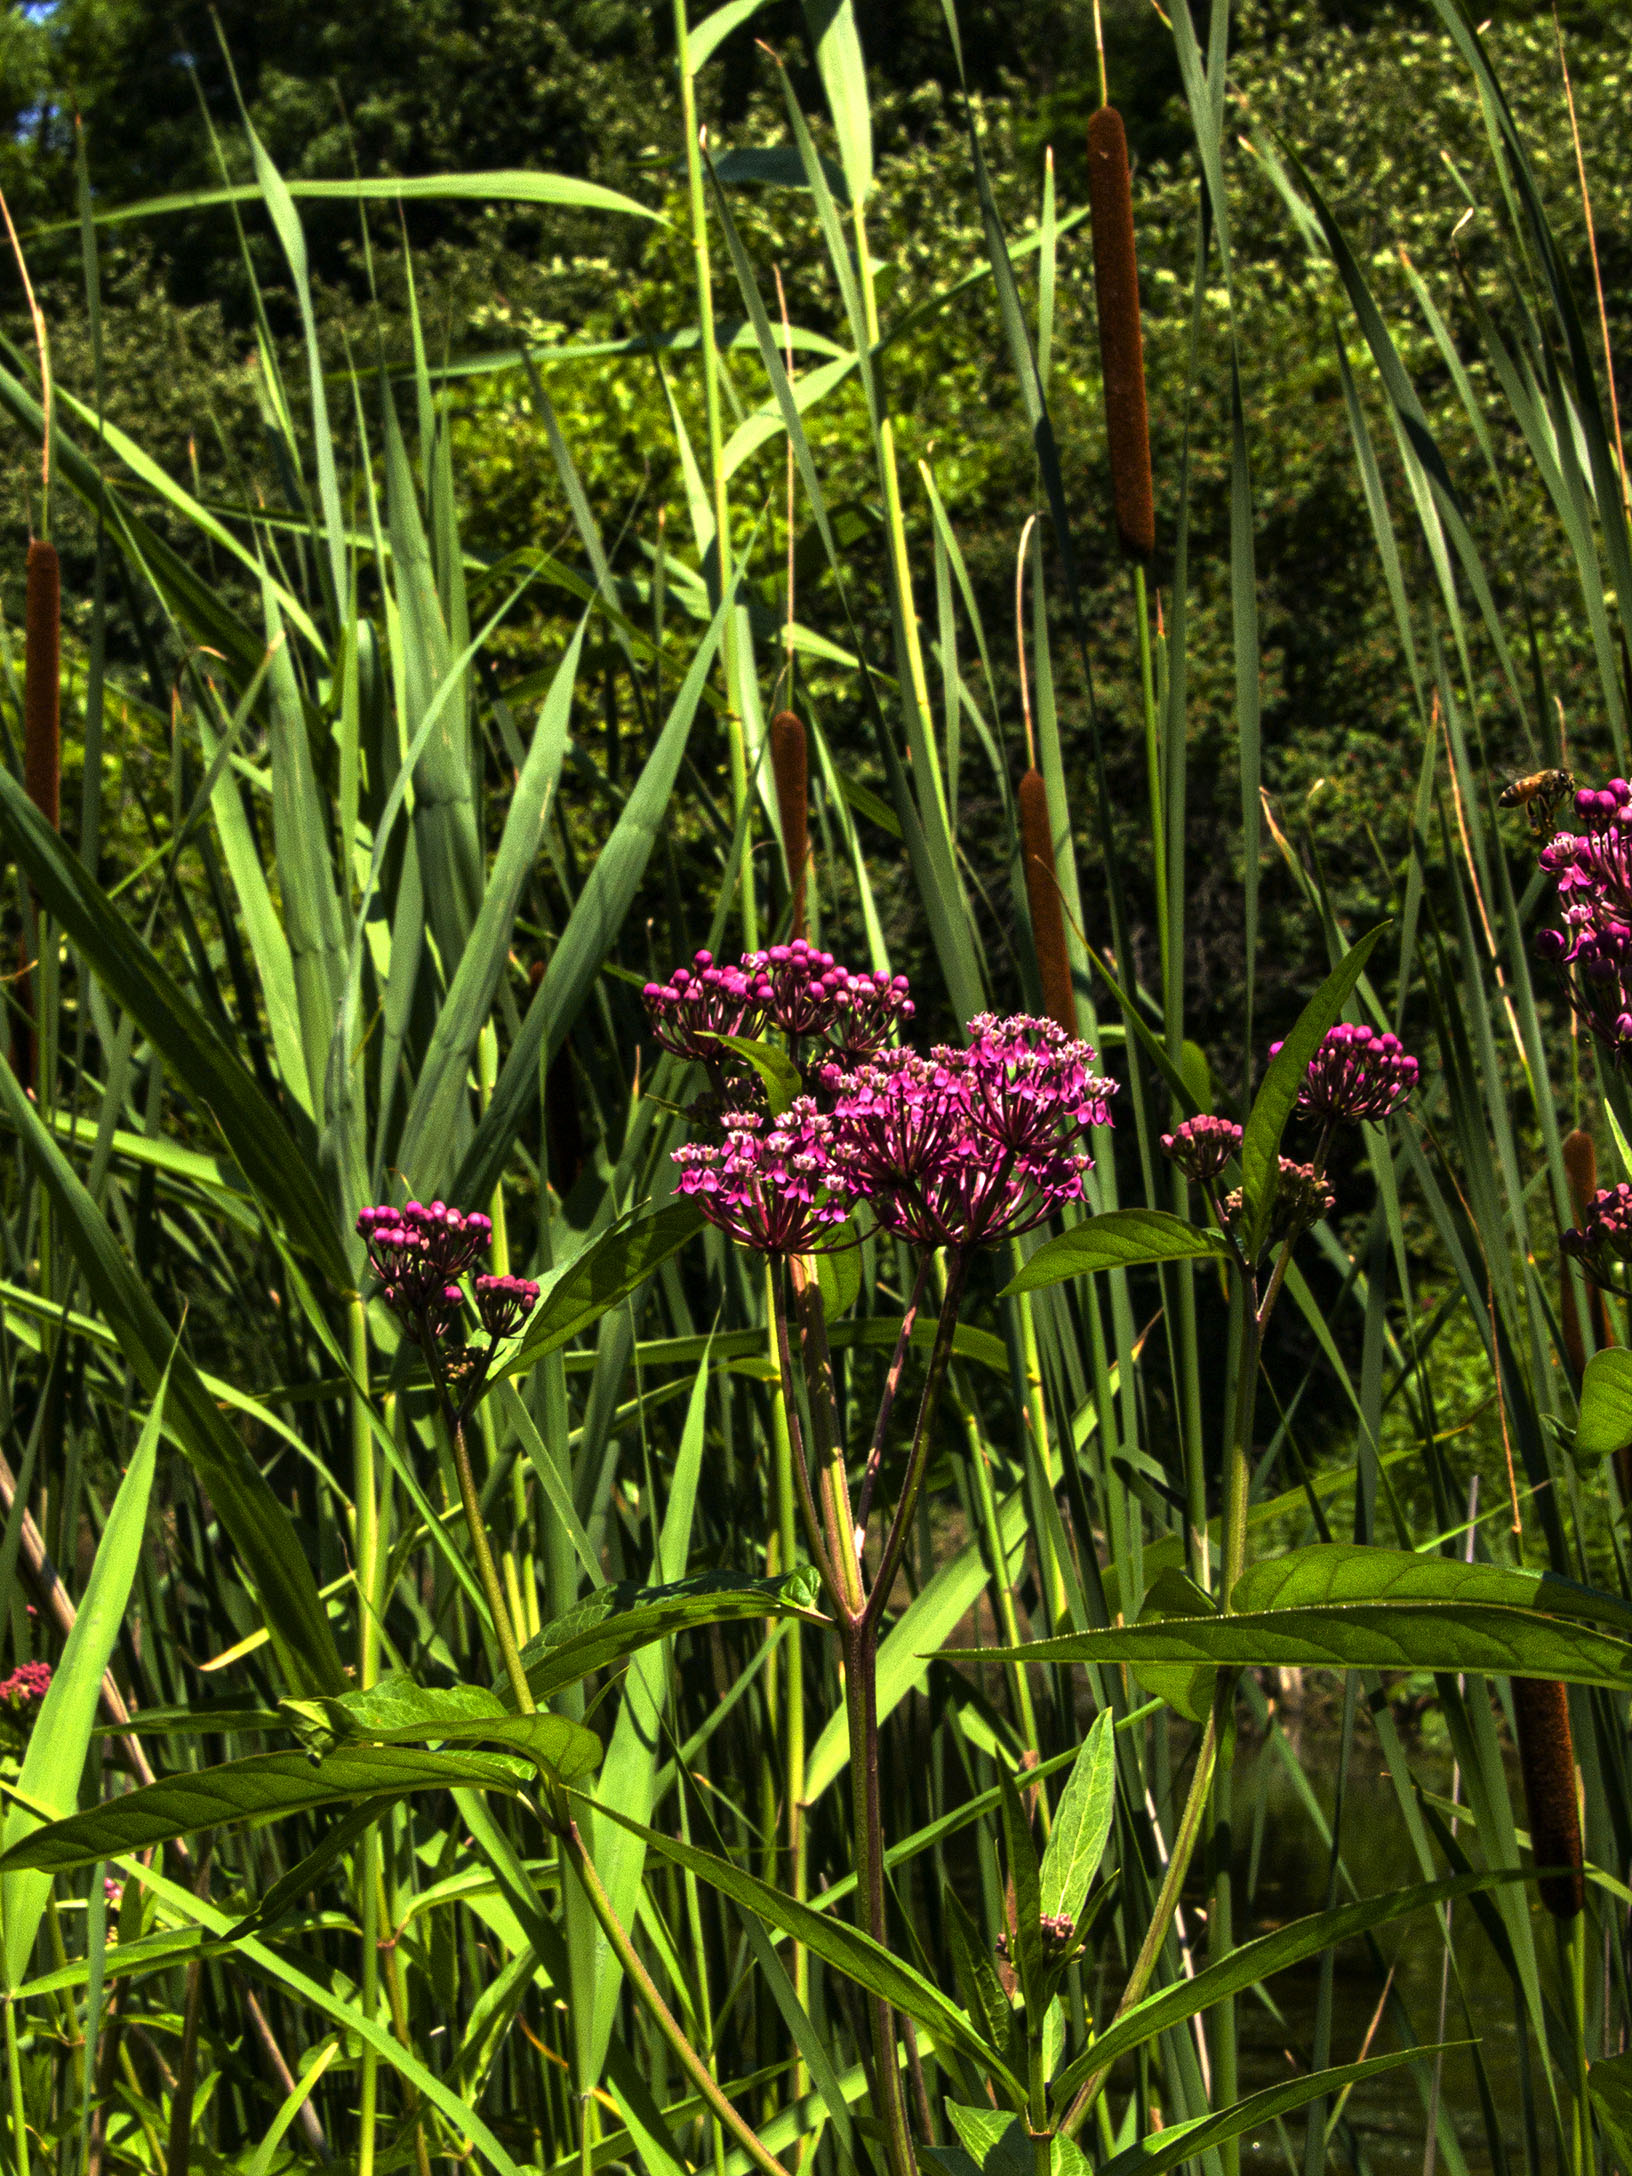 Cattails and Swamp Milkweed